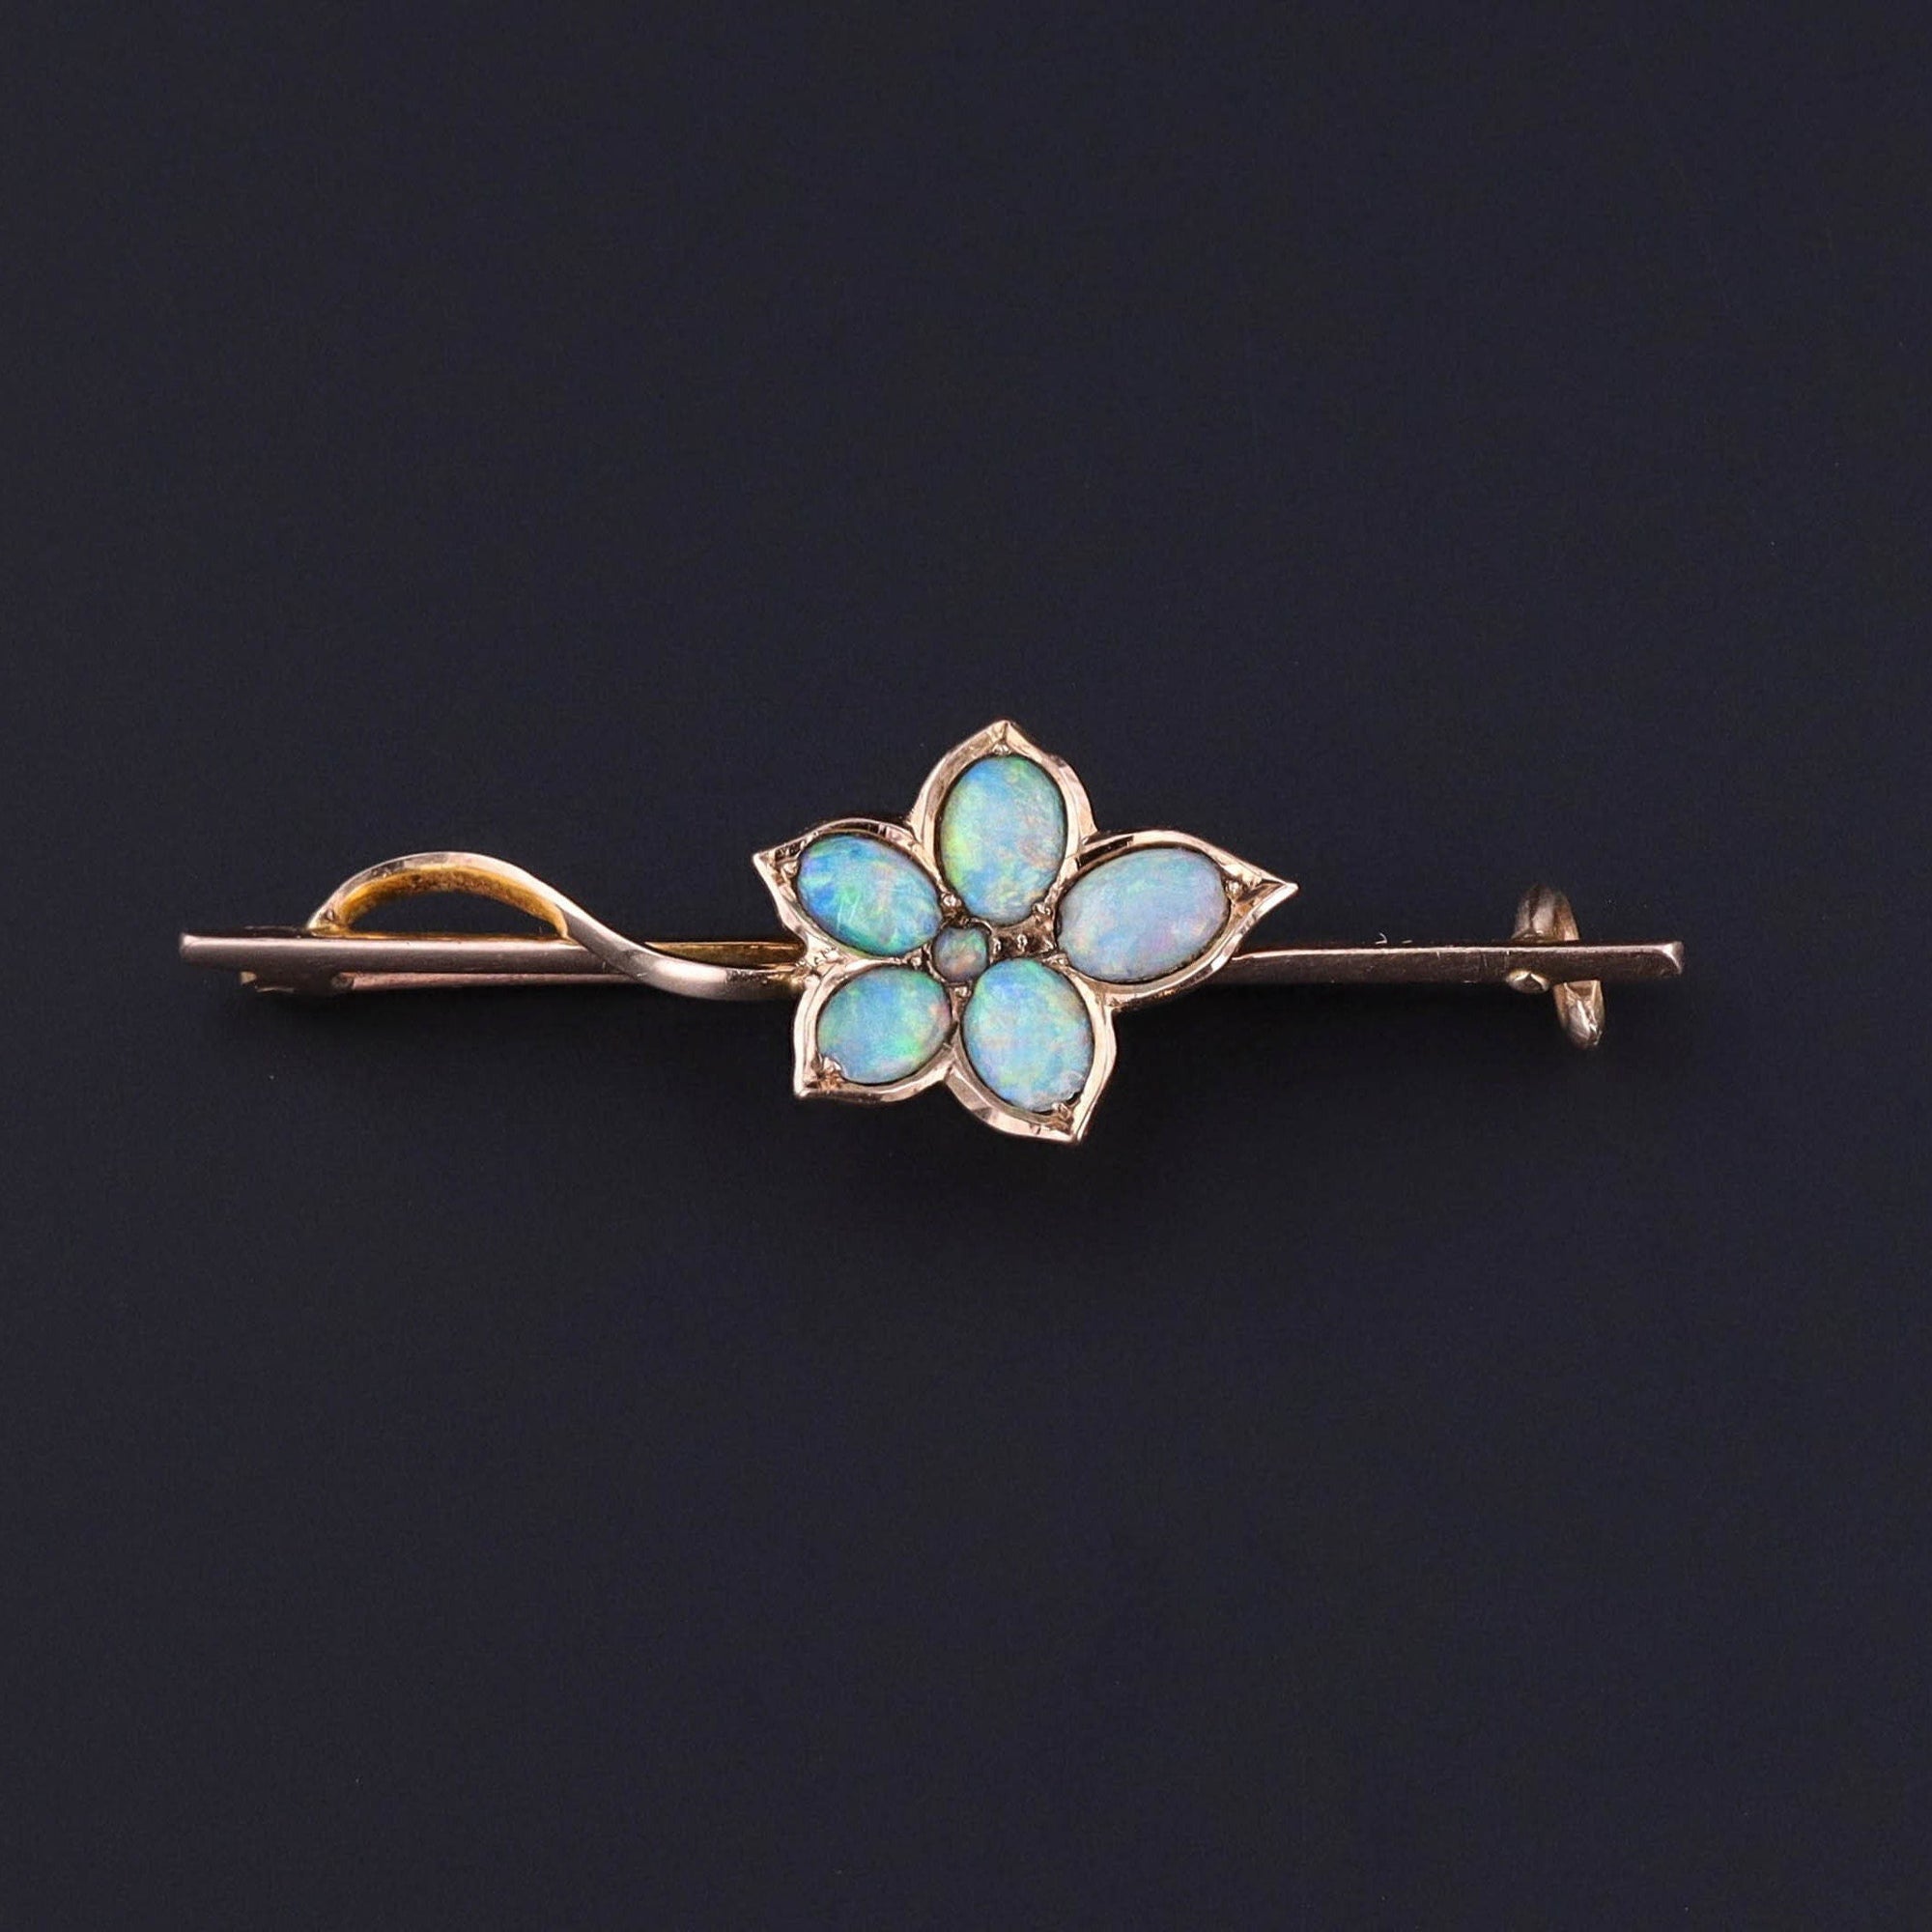 Antique Opal Flower Brooch of 18k Gold